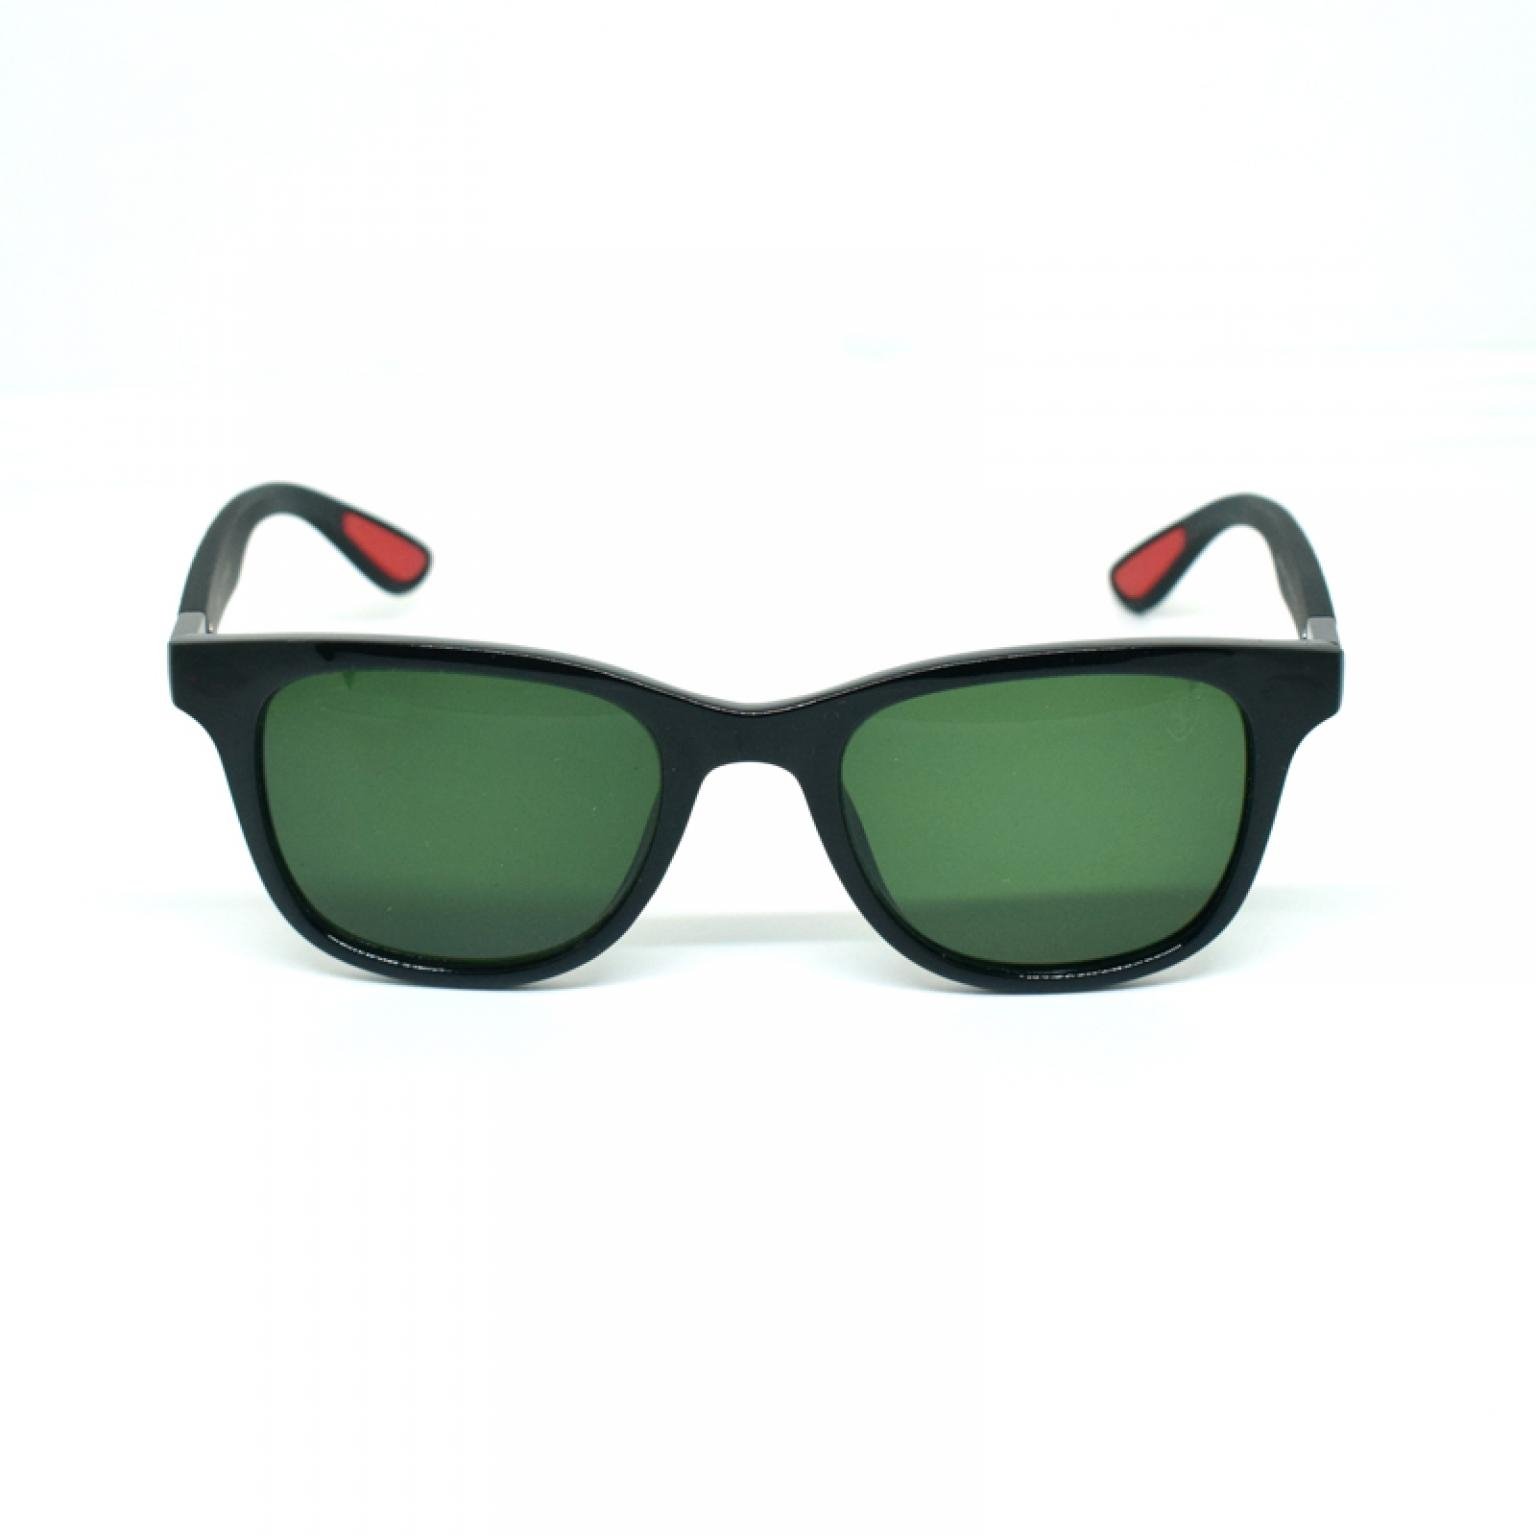 Classic Wayfarer Sunglasses For Men,s Fashion With Stylish New Design Glass Lens